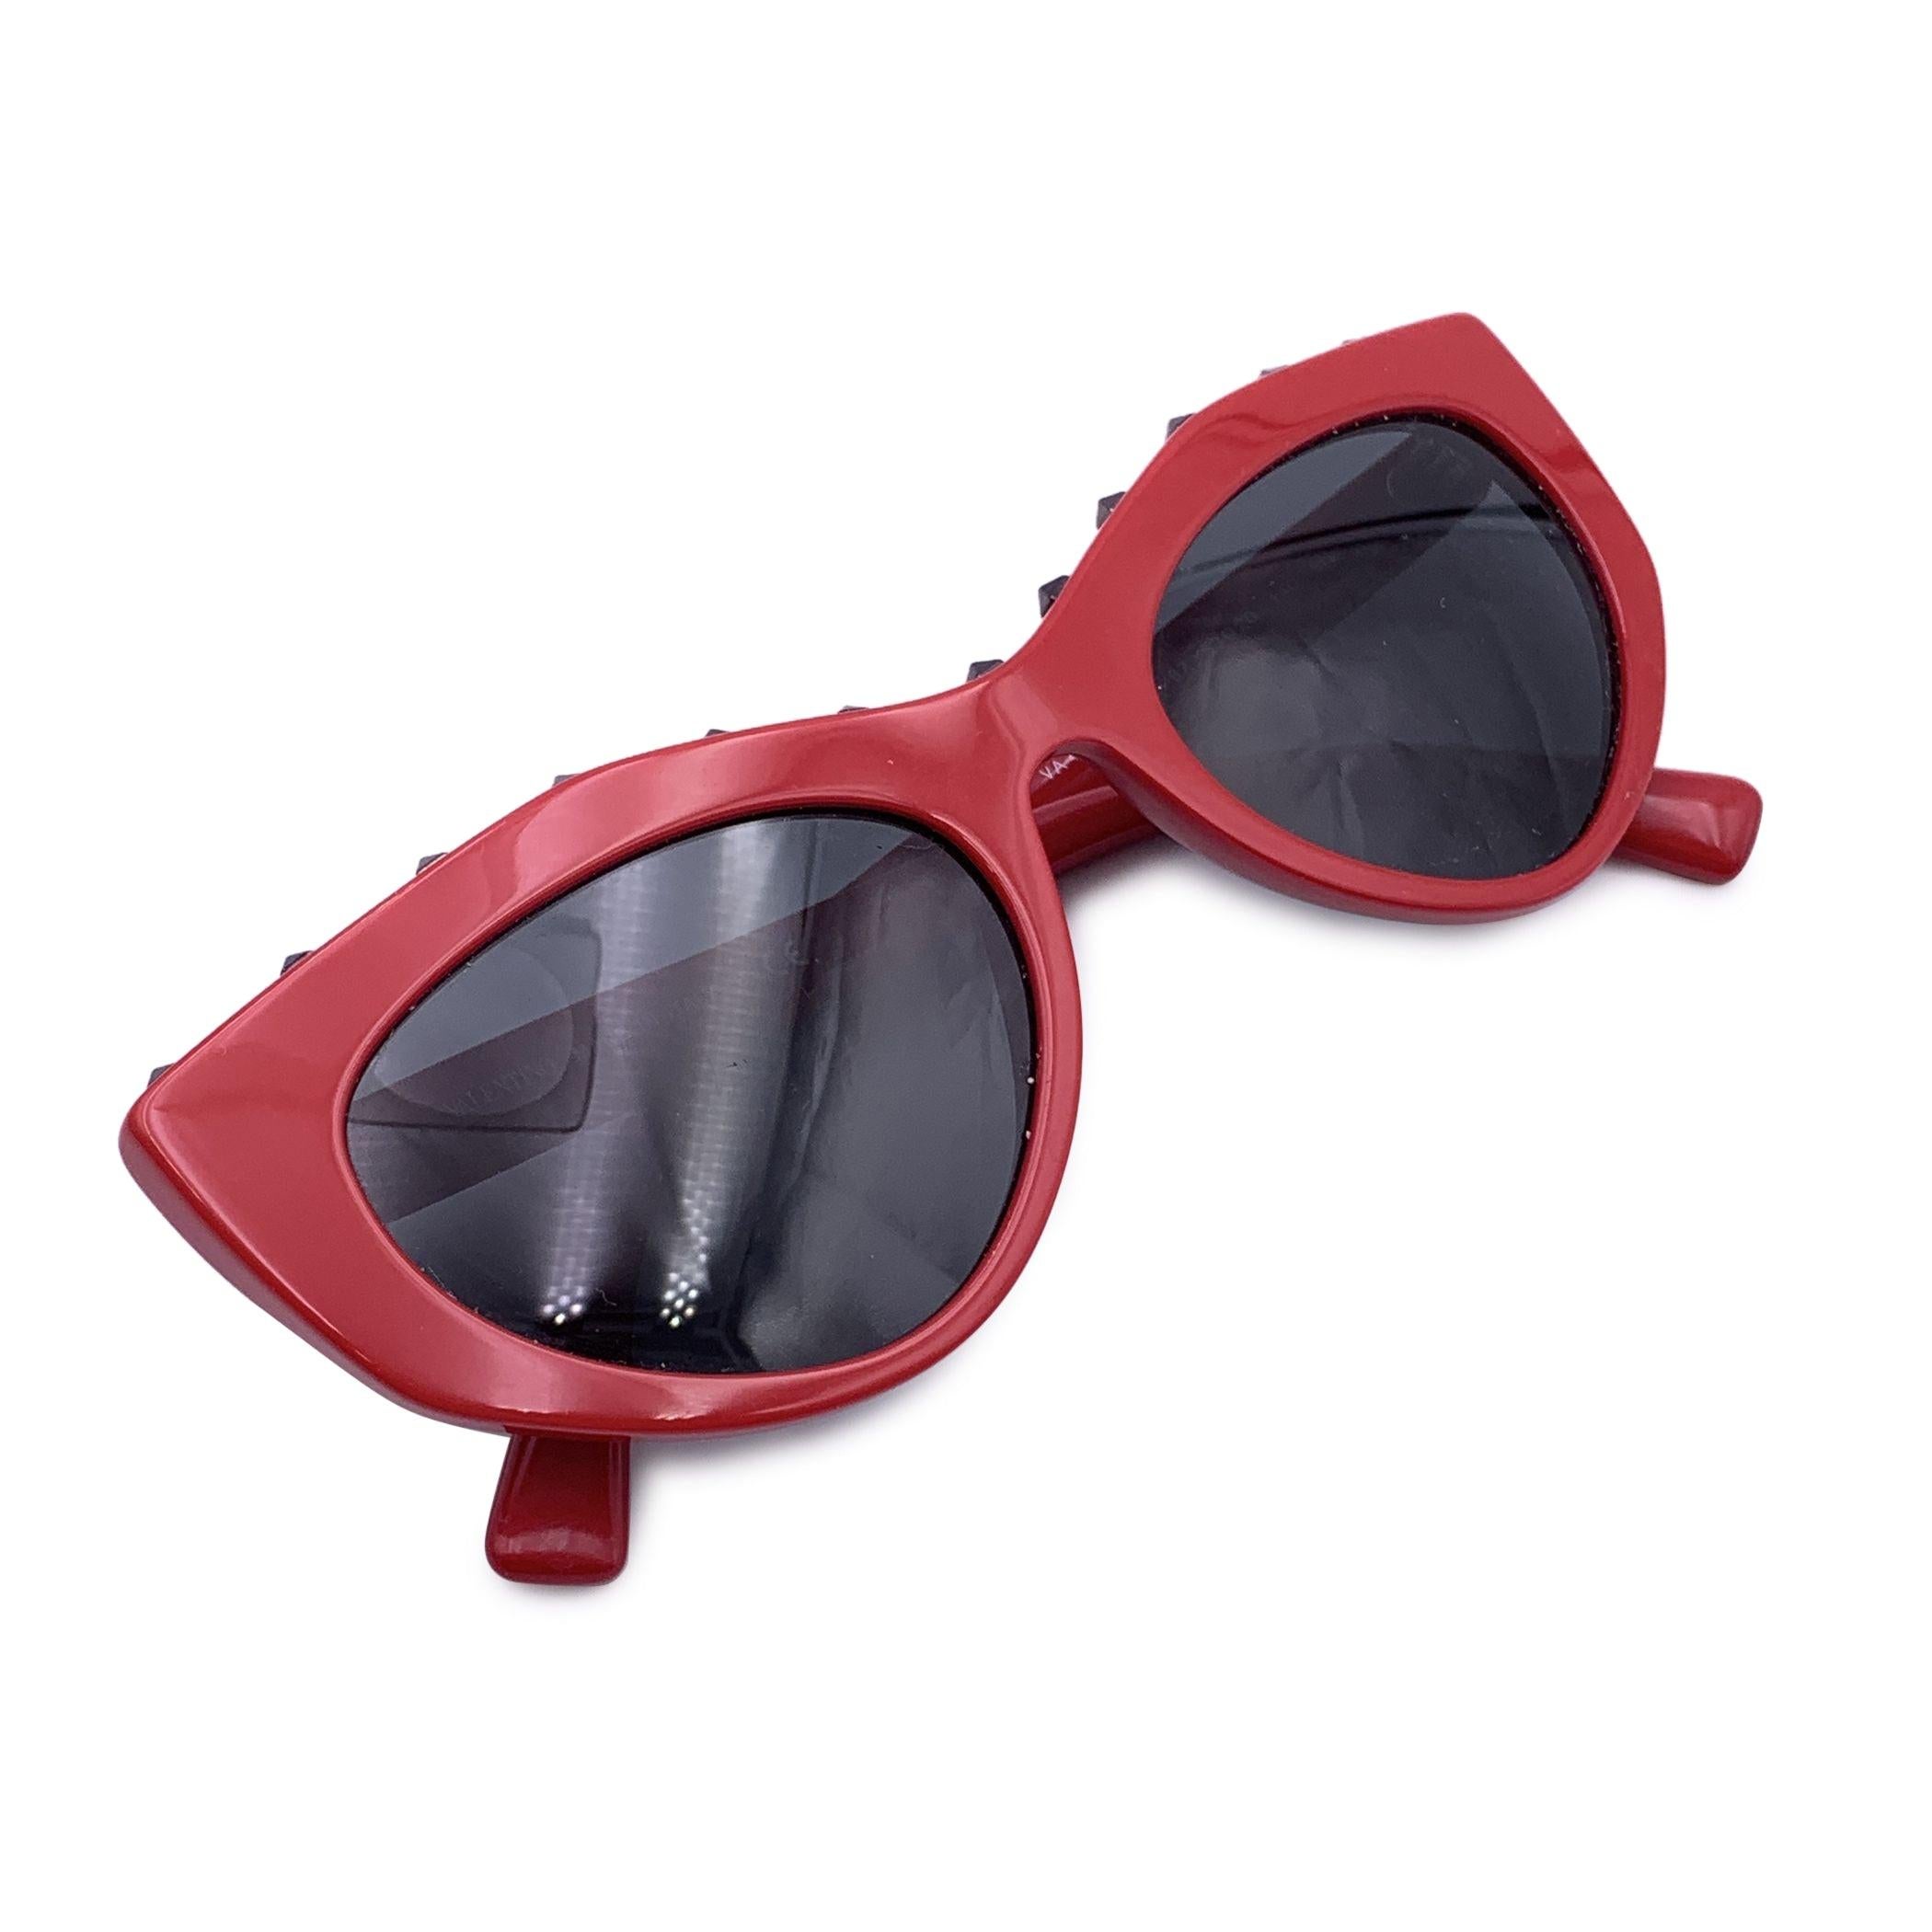 Valentino Cat eye Sunglasses, Model 'Soul Rockstud - VA 4060'. Red acetate frame with gunmetal studs on top. Cat-eye design. Valentino signature on the top. Original grey lenses. Mod & refs: VA 4060 - 5110/87 - 53/20 - 140 - 3N. Made in Italy